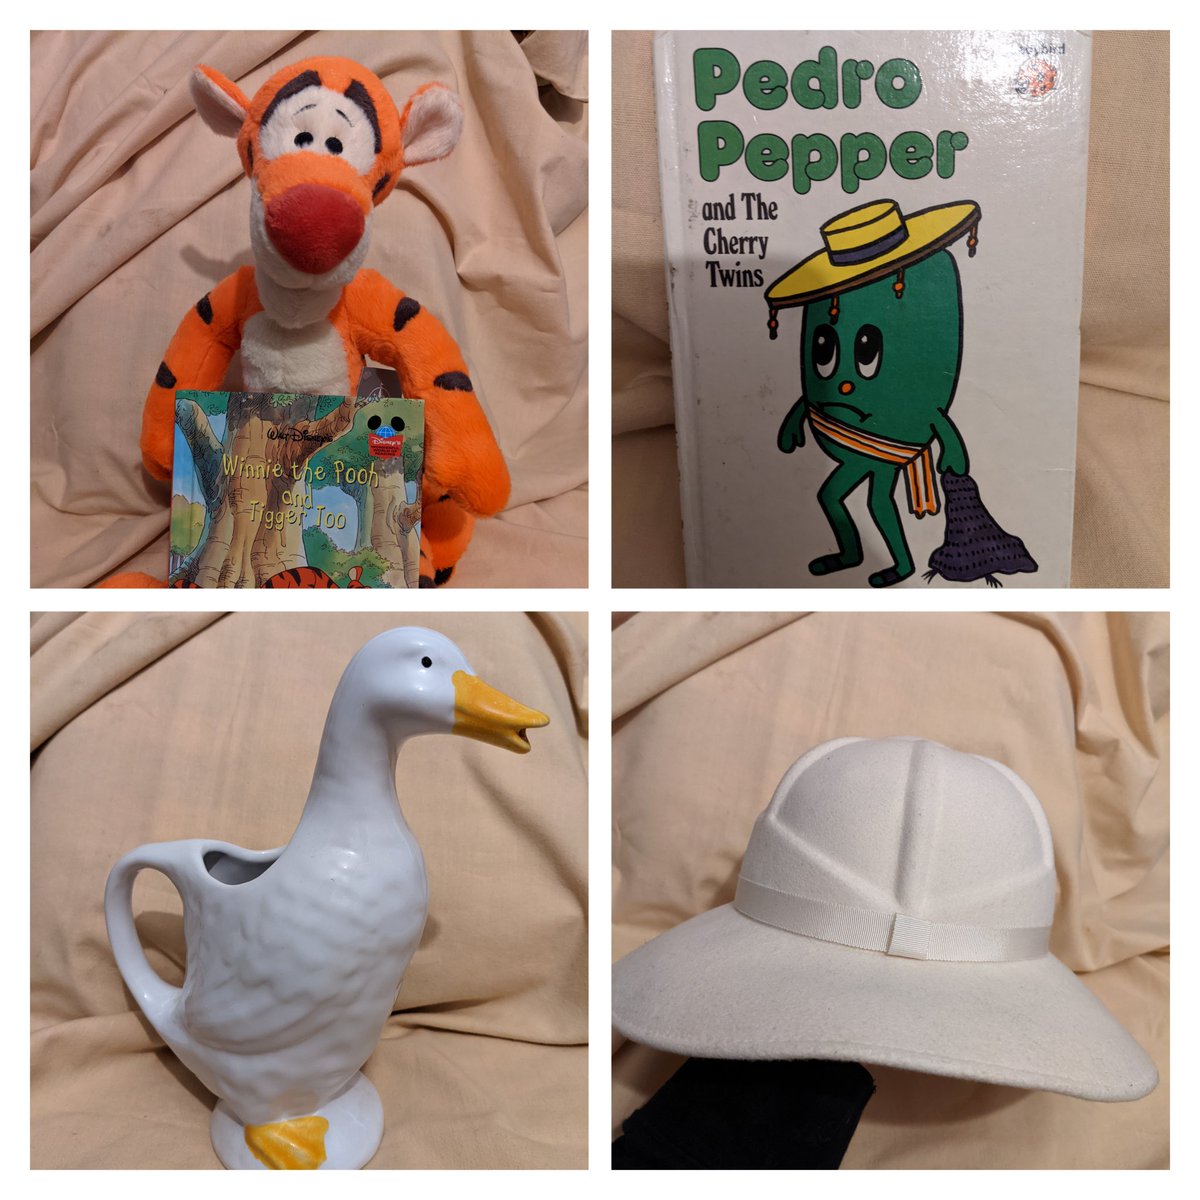 Few goodies added this evening
eBay listed, link in bio 💜

#vintage #retro #kitsch #ceramic #duck #pedropepper #gardengang #tigger #disney #plush #secondhandseptember #bermonatrend #hats #london #fashion